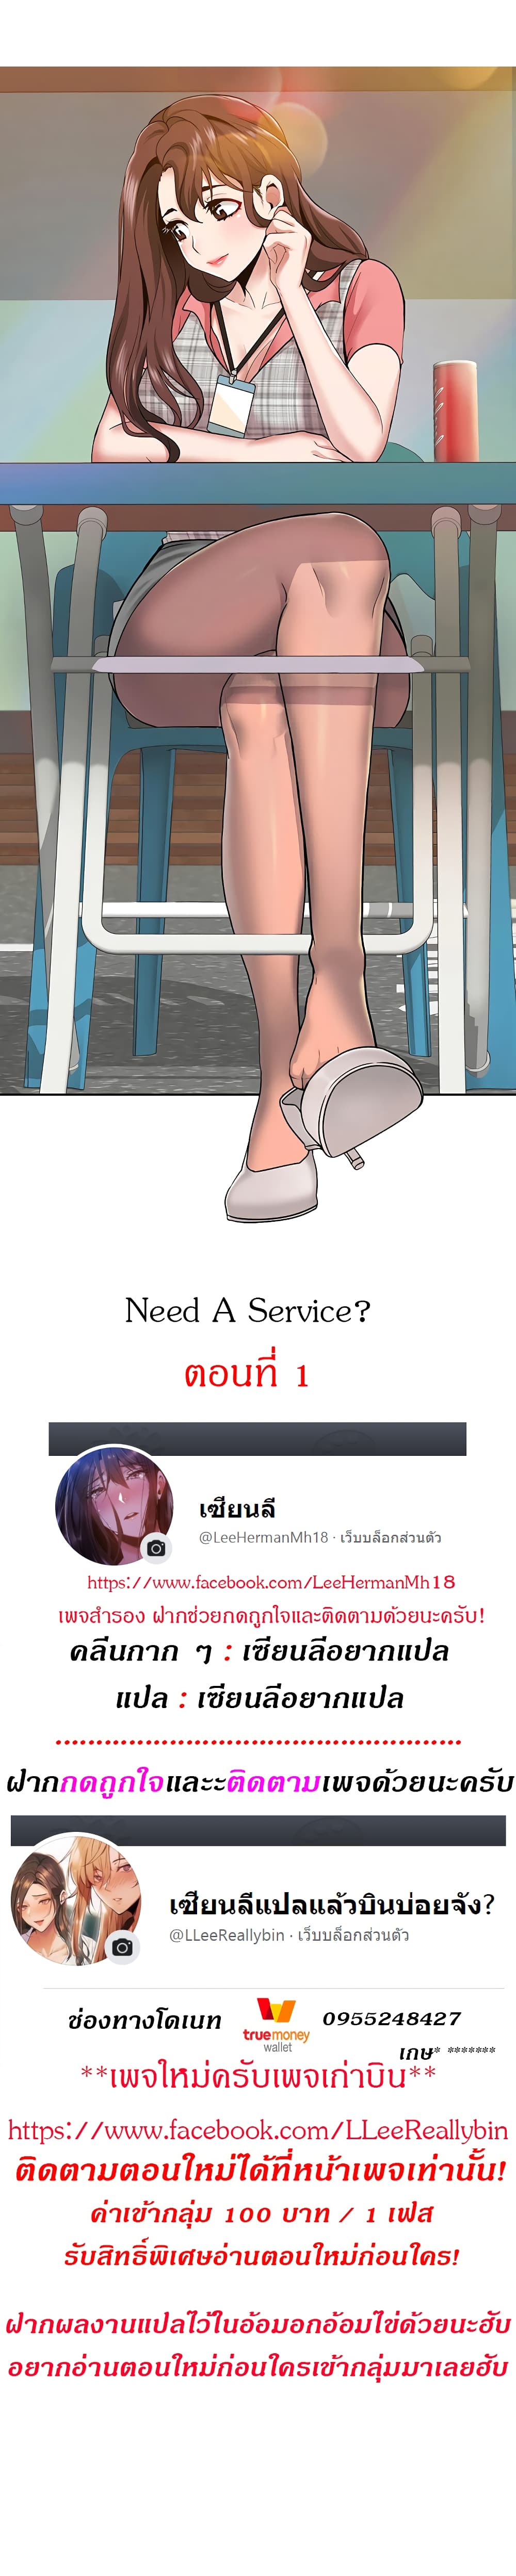 Need A Service 1 01